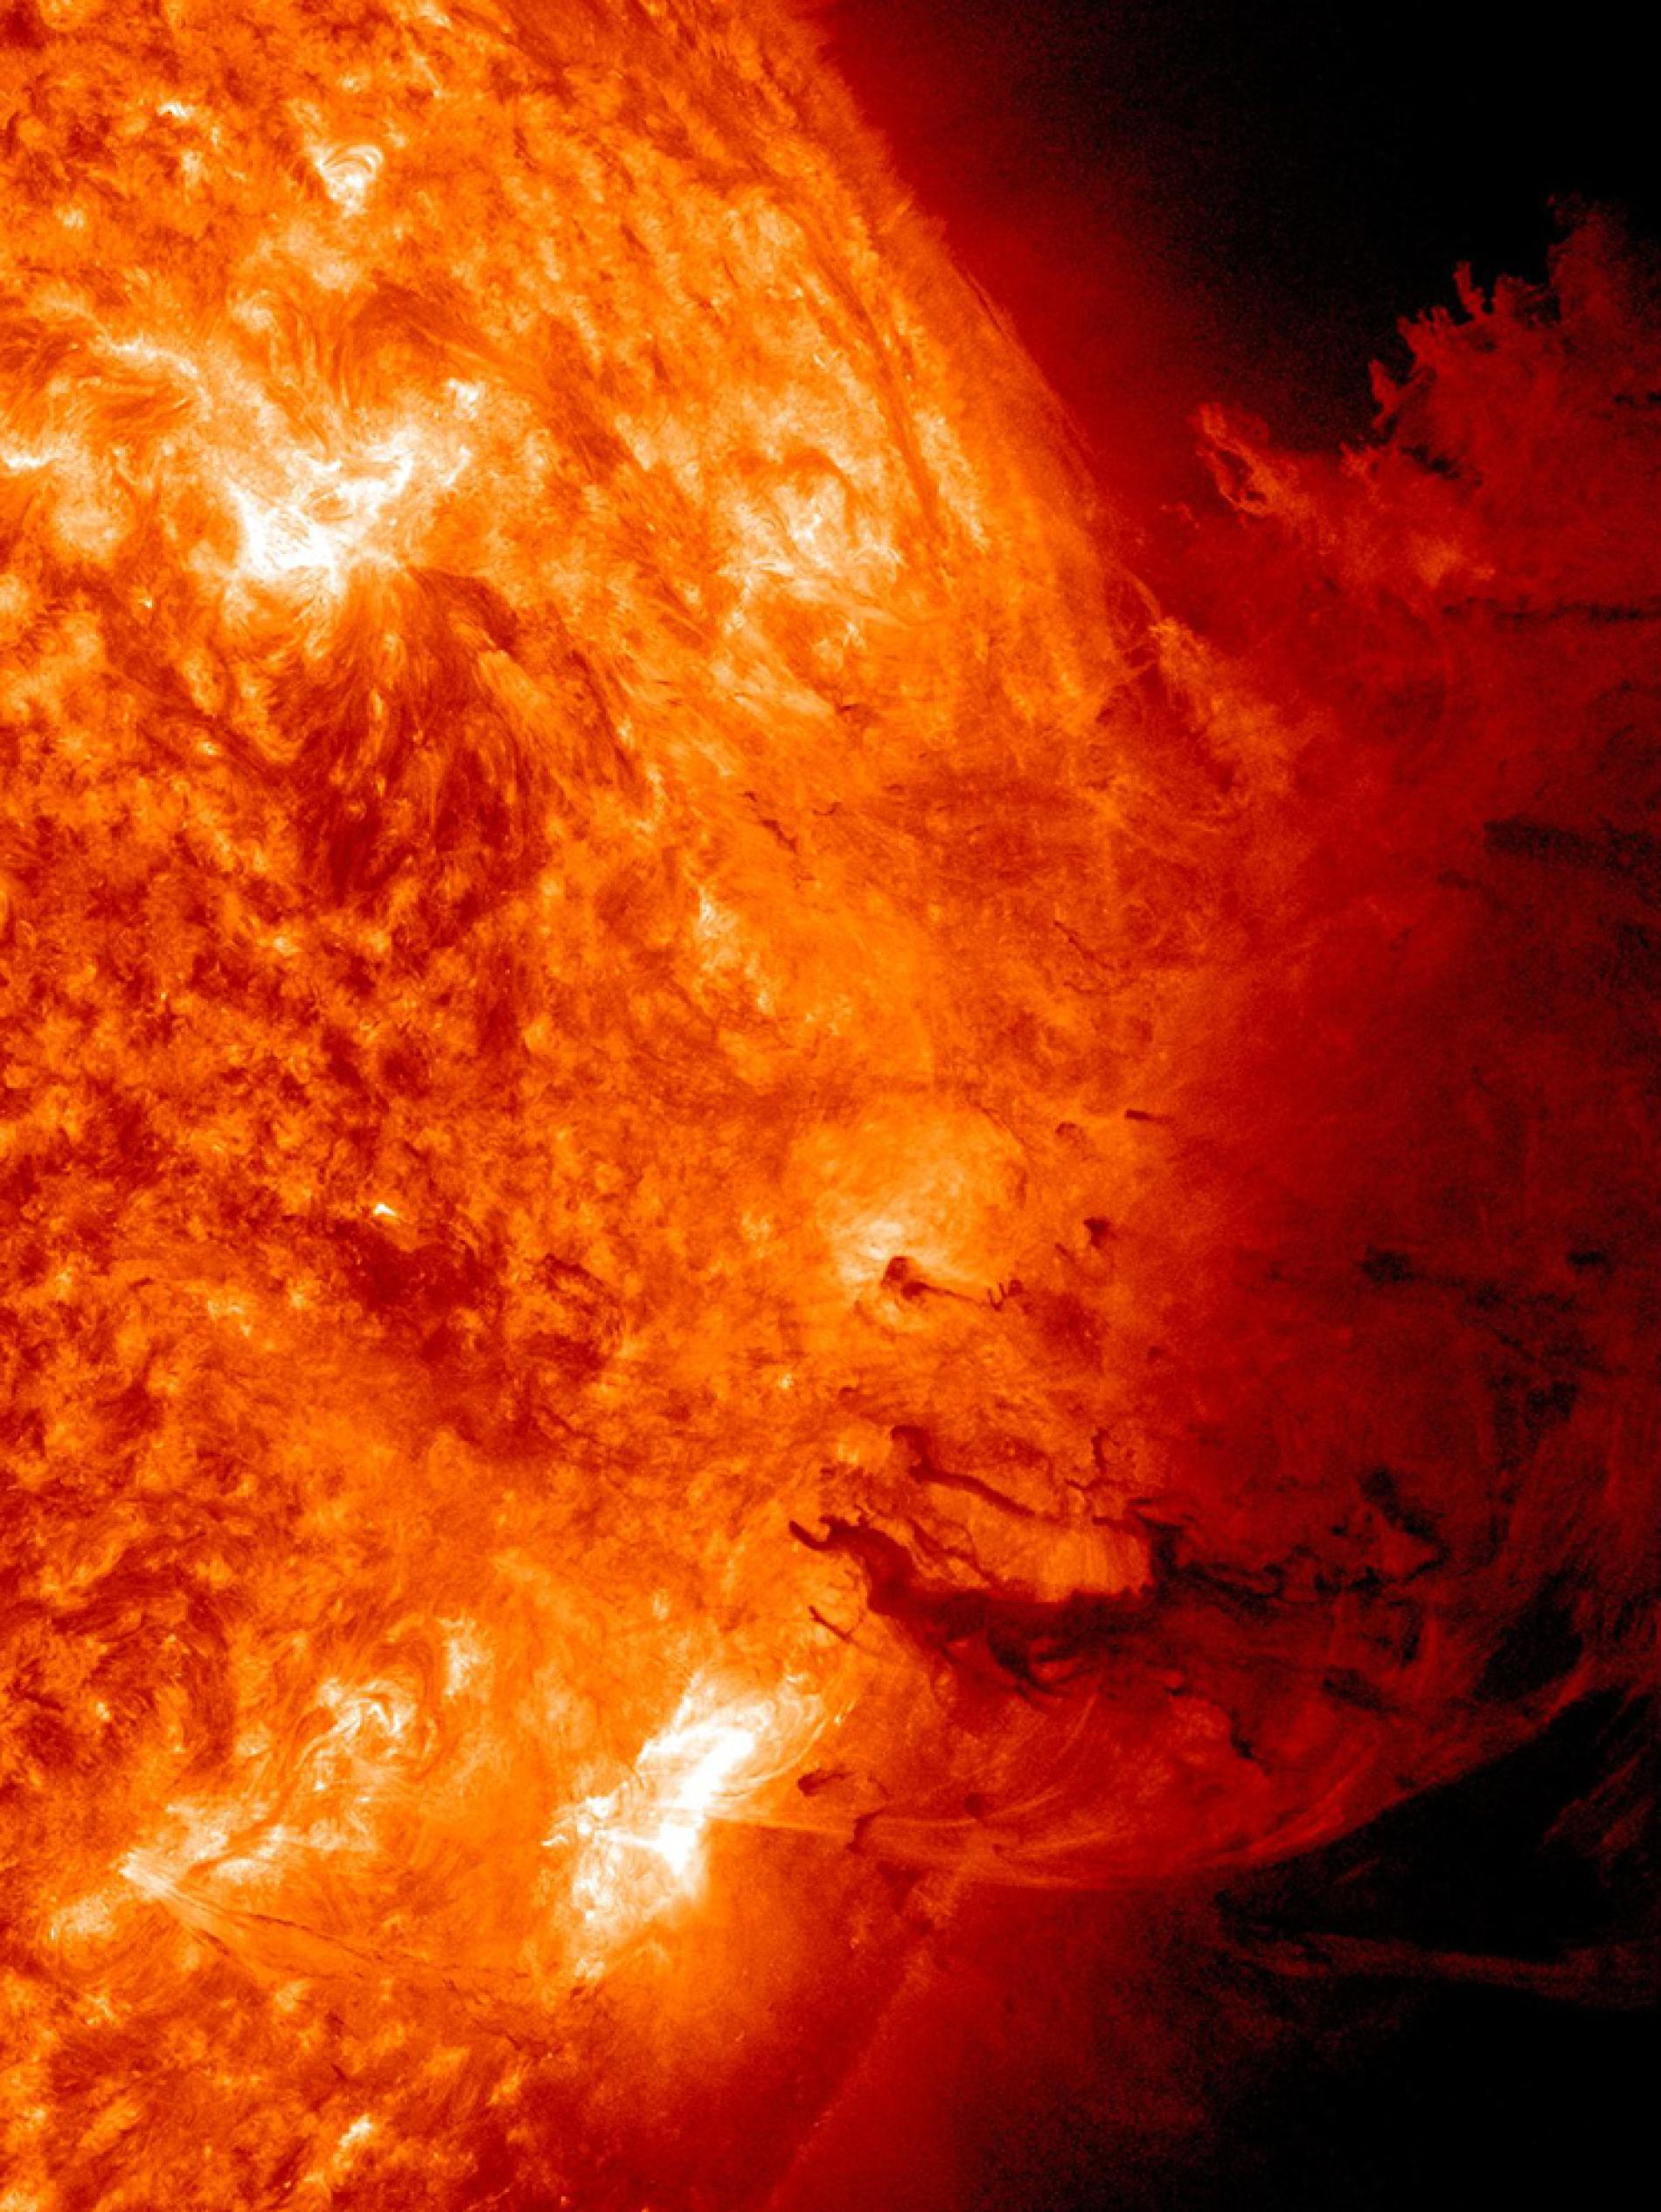 Solar Flare Sparks Biggest Eruption Ever Seen on Sun